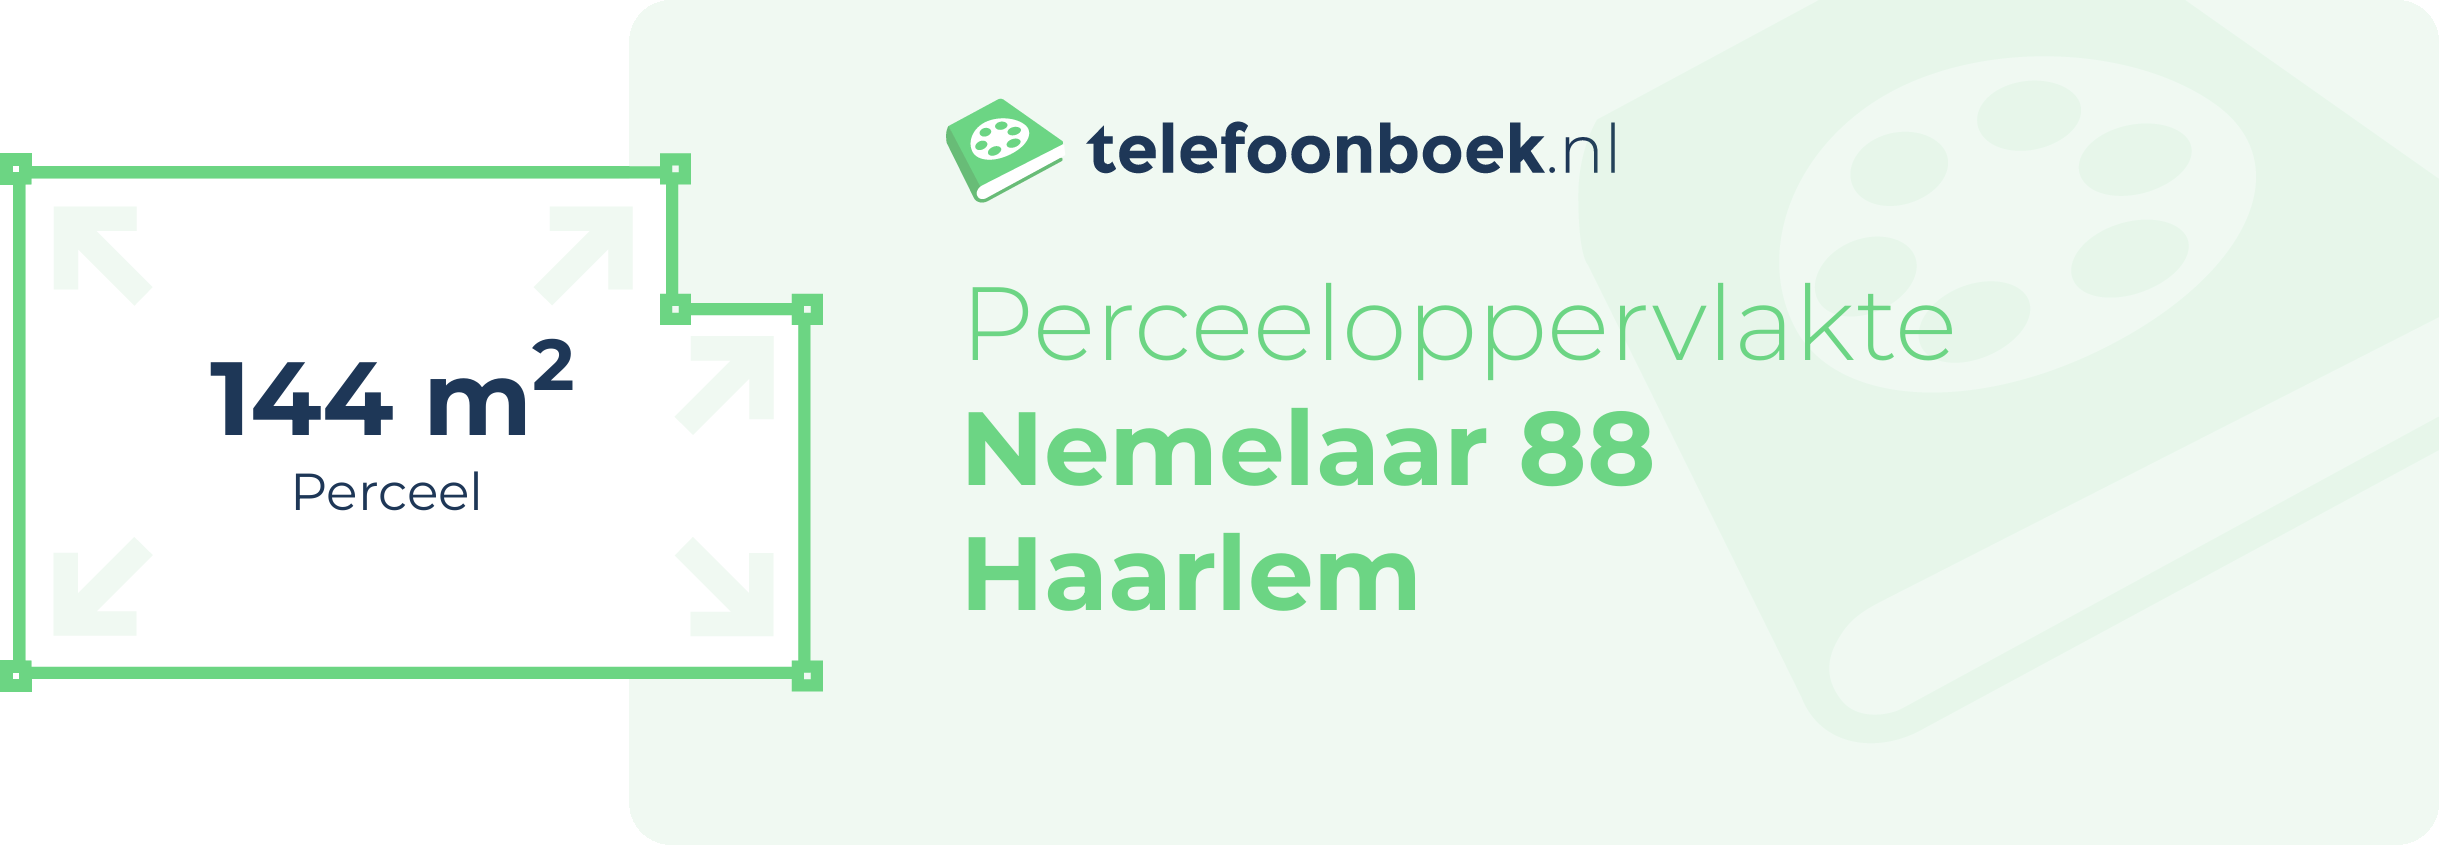 Perceeloppervlakte Nemelaar 88 Haarlem